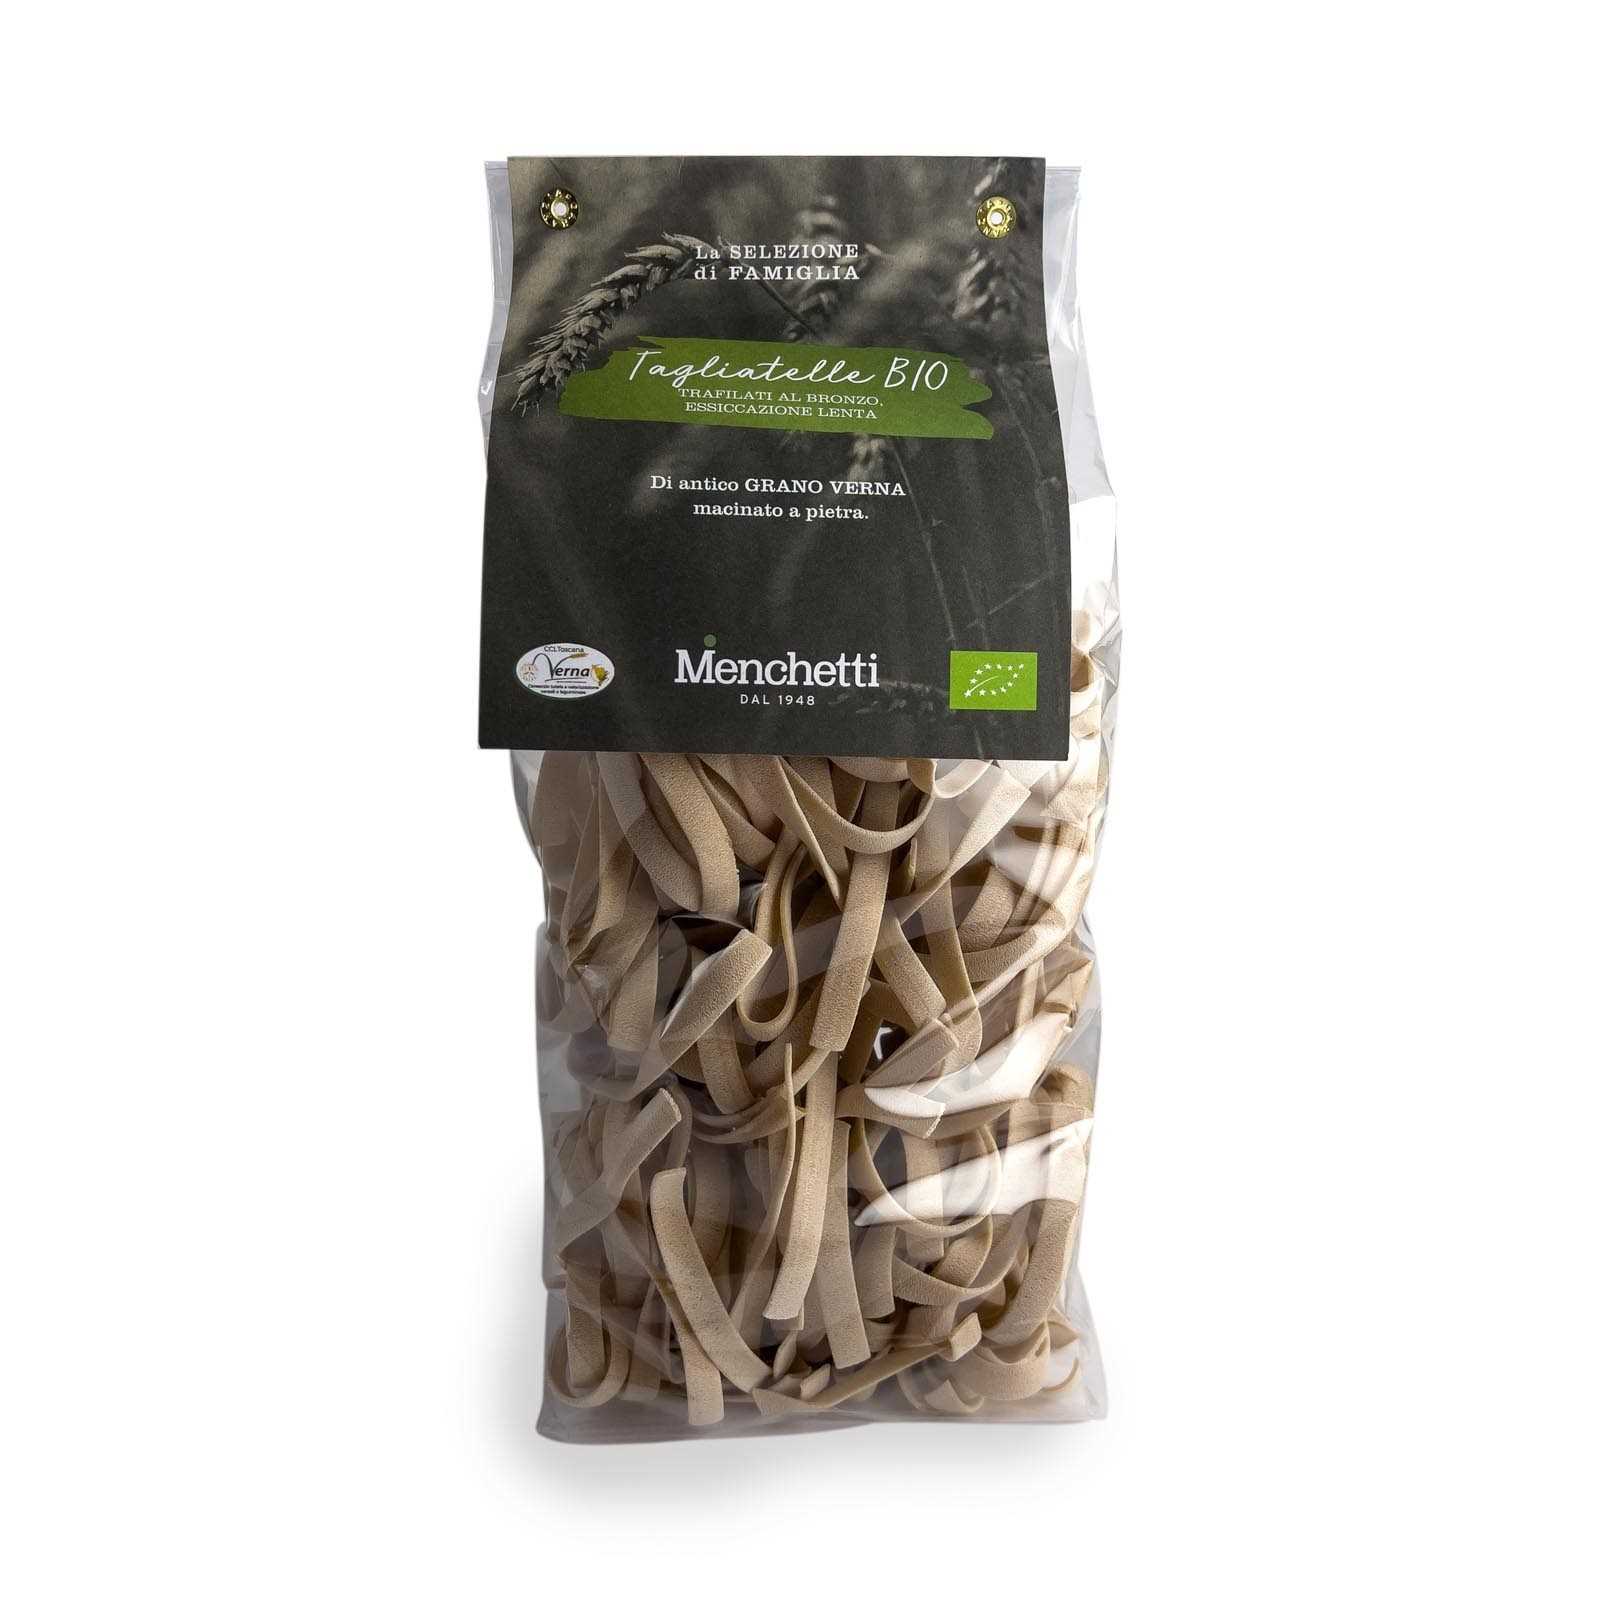 Organic bronze drawn “Tagliatelle”, slow drying. Organic stone-ground Verna soft wheat pasta with high fiber content.